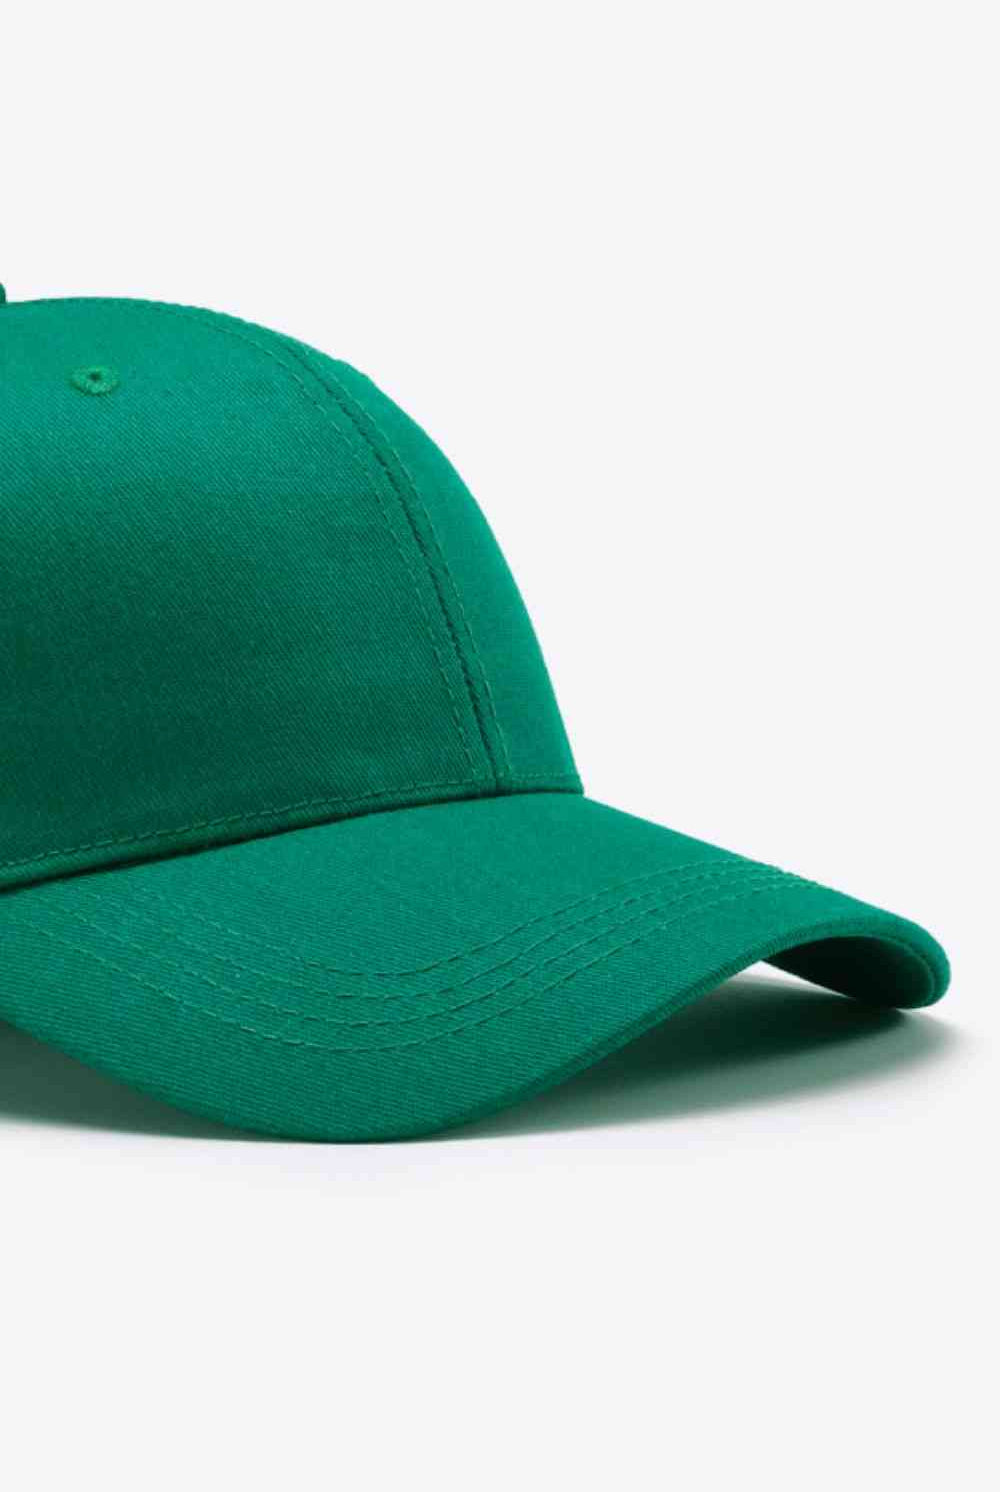 Sea Green Plain Adjustable Cotton Baseball Cap Gifts